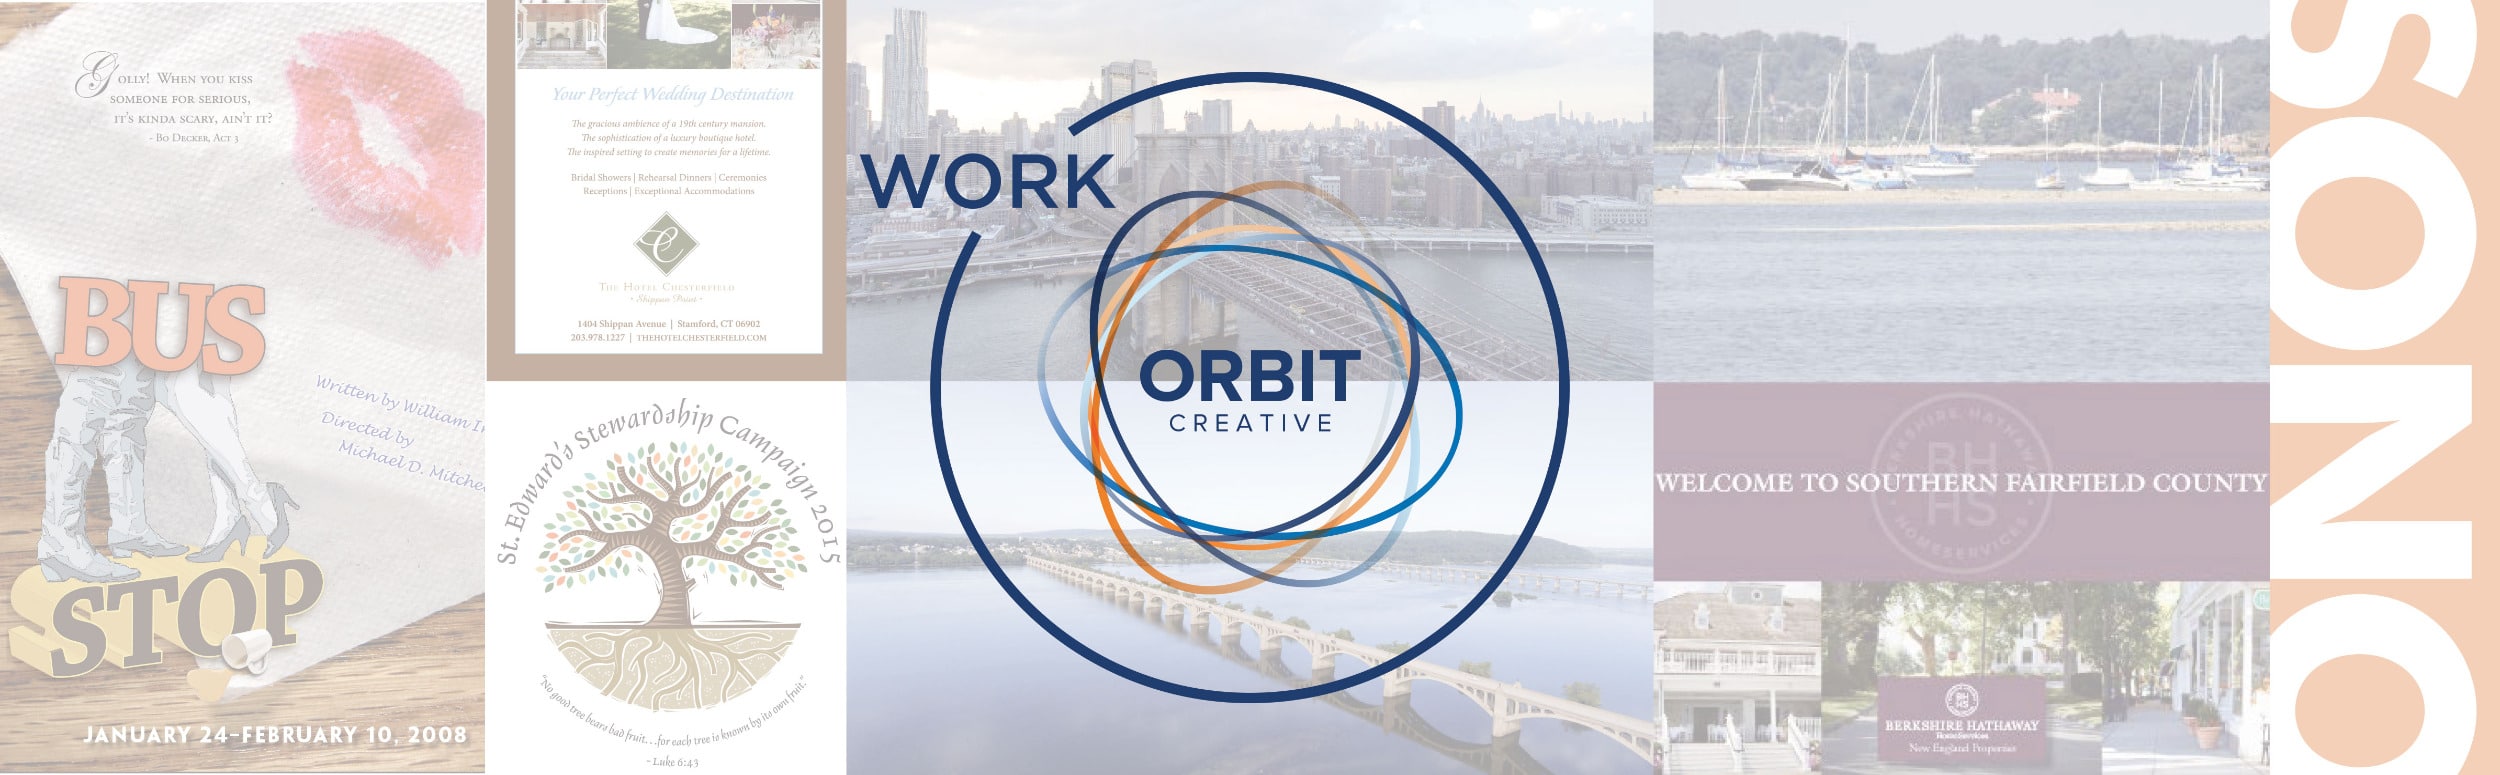 Orbit Creative Work